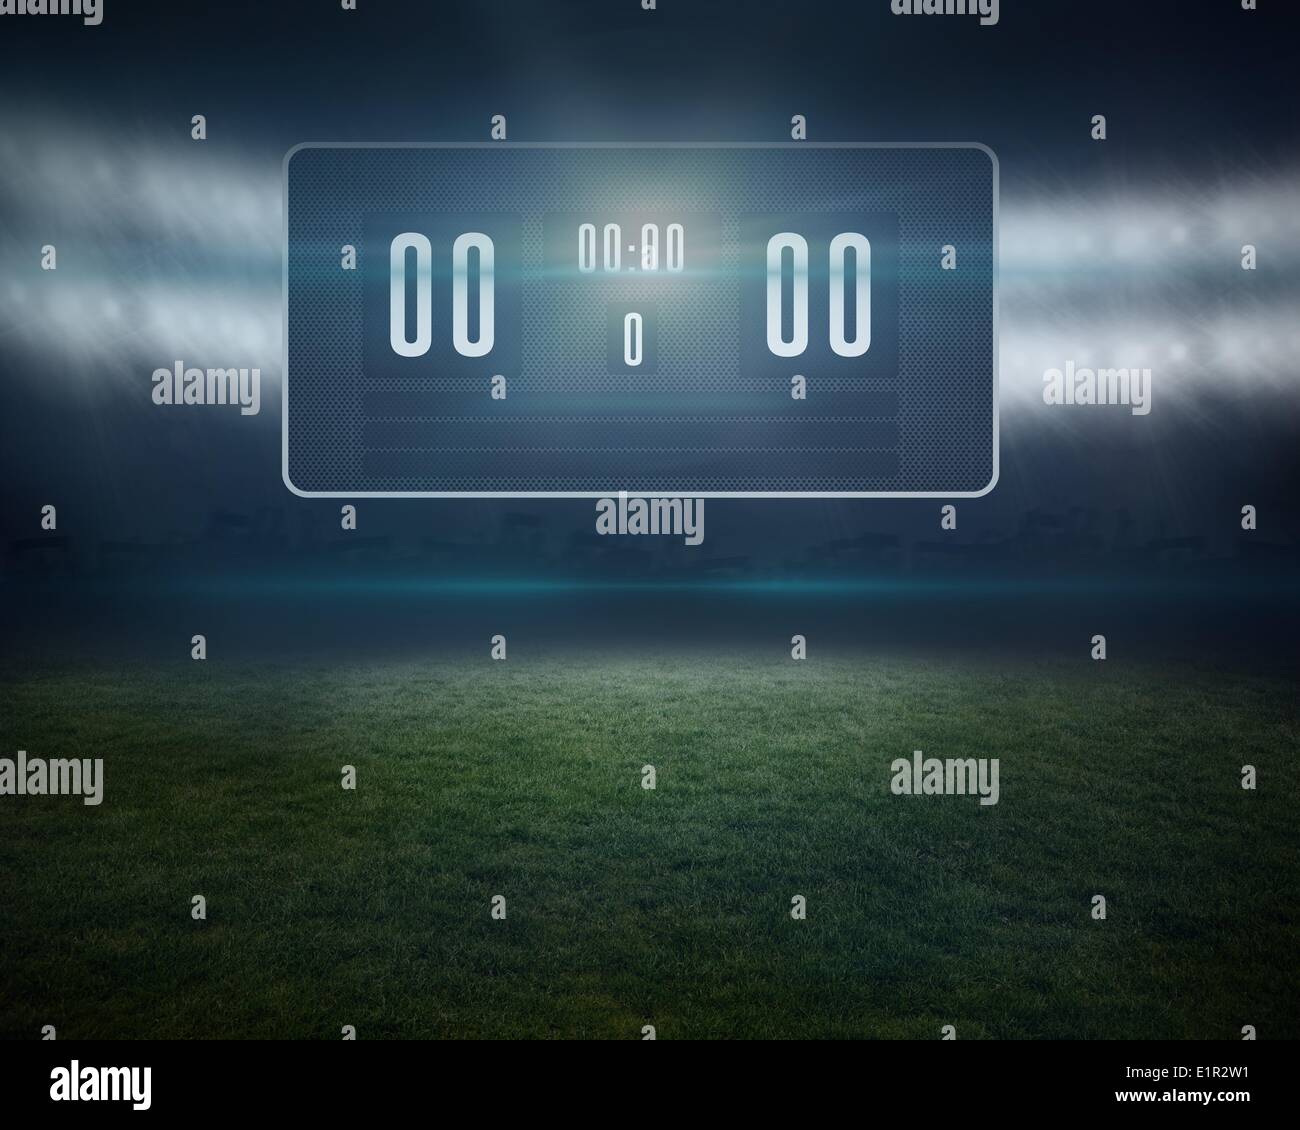 Football pitch with black scoreboard Stock Photo